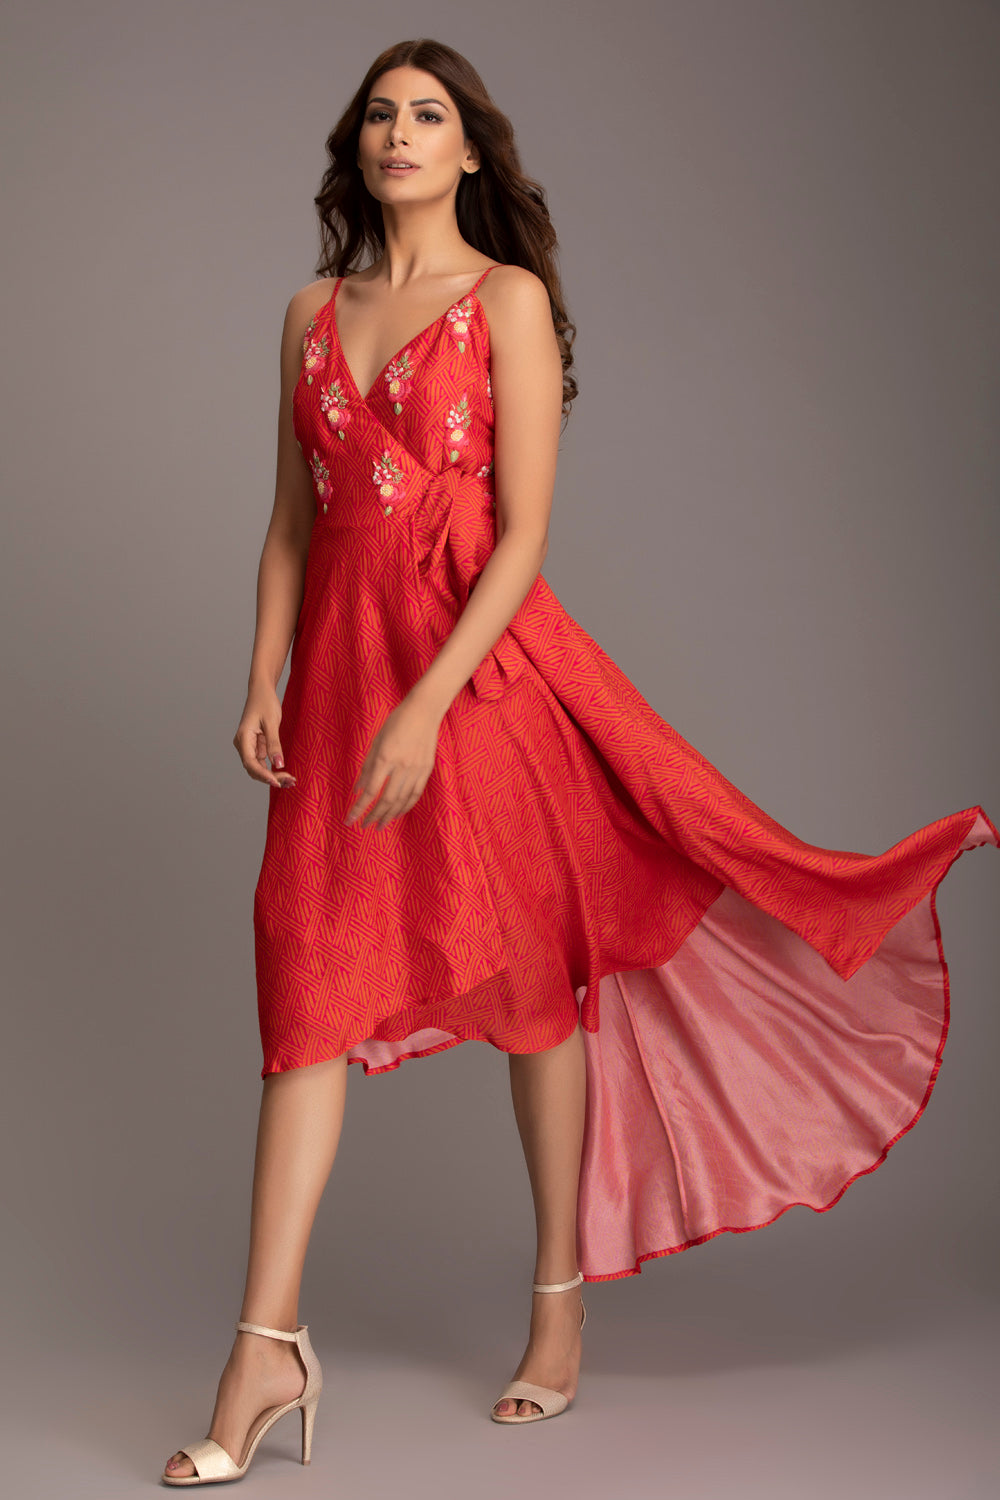 Geometric red strap dress